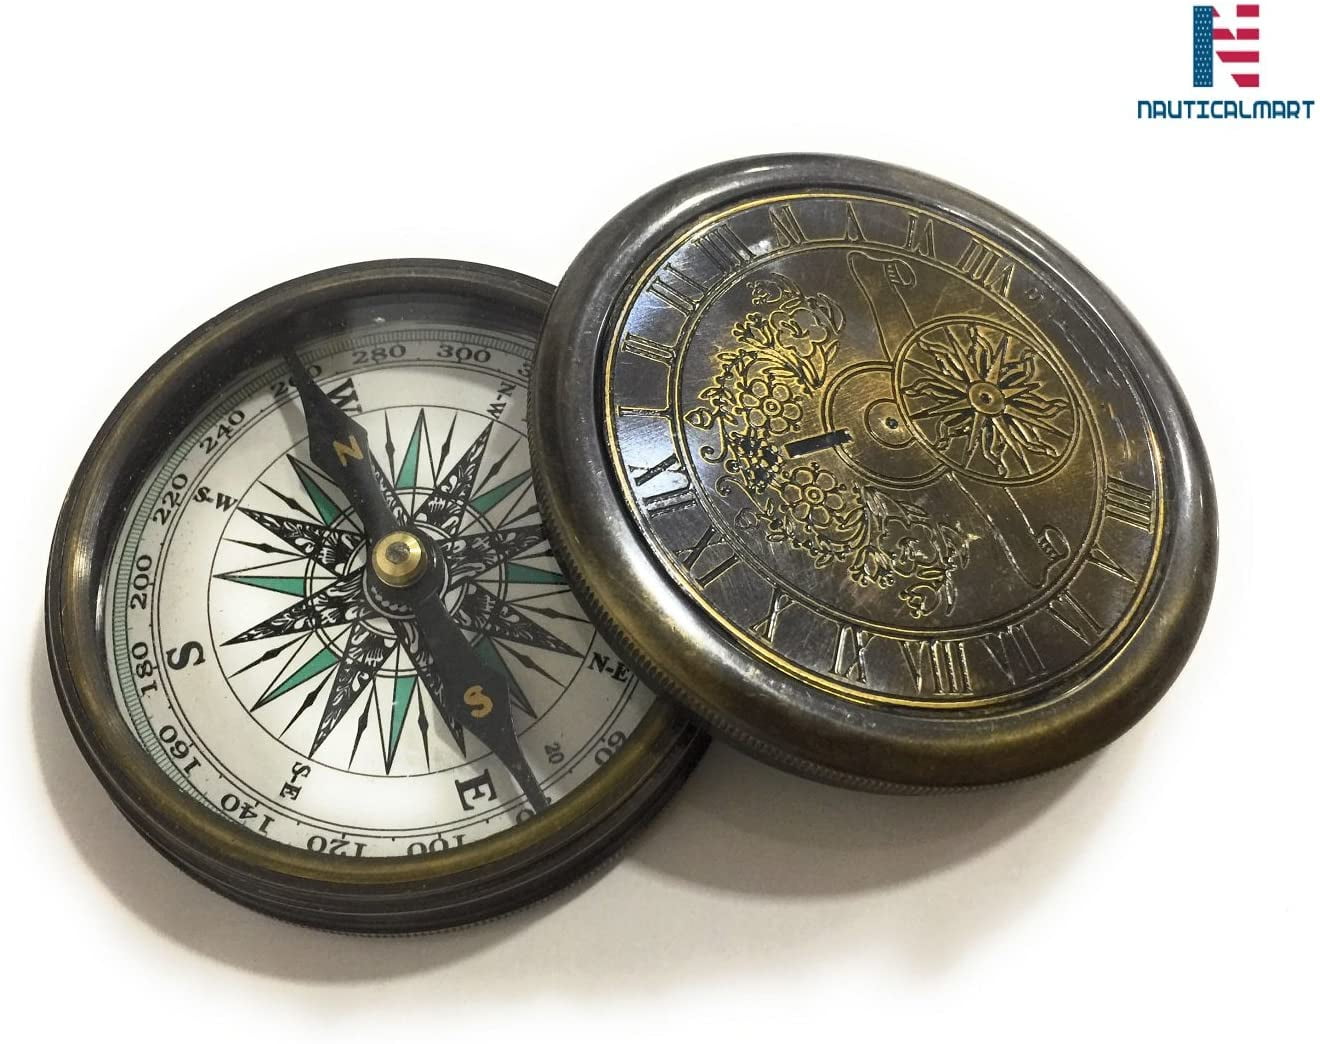 The Beatle Finder Compass Yellow Submarine Poem Engrave Vintage Antique Compass 